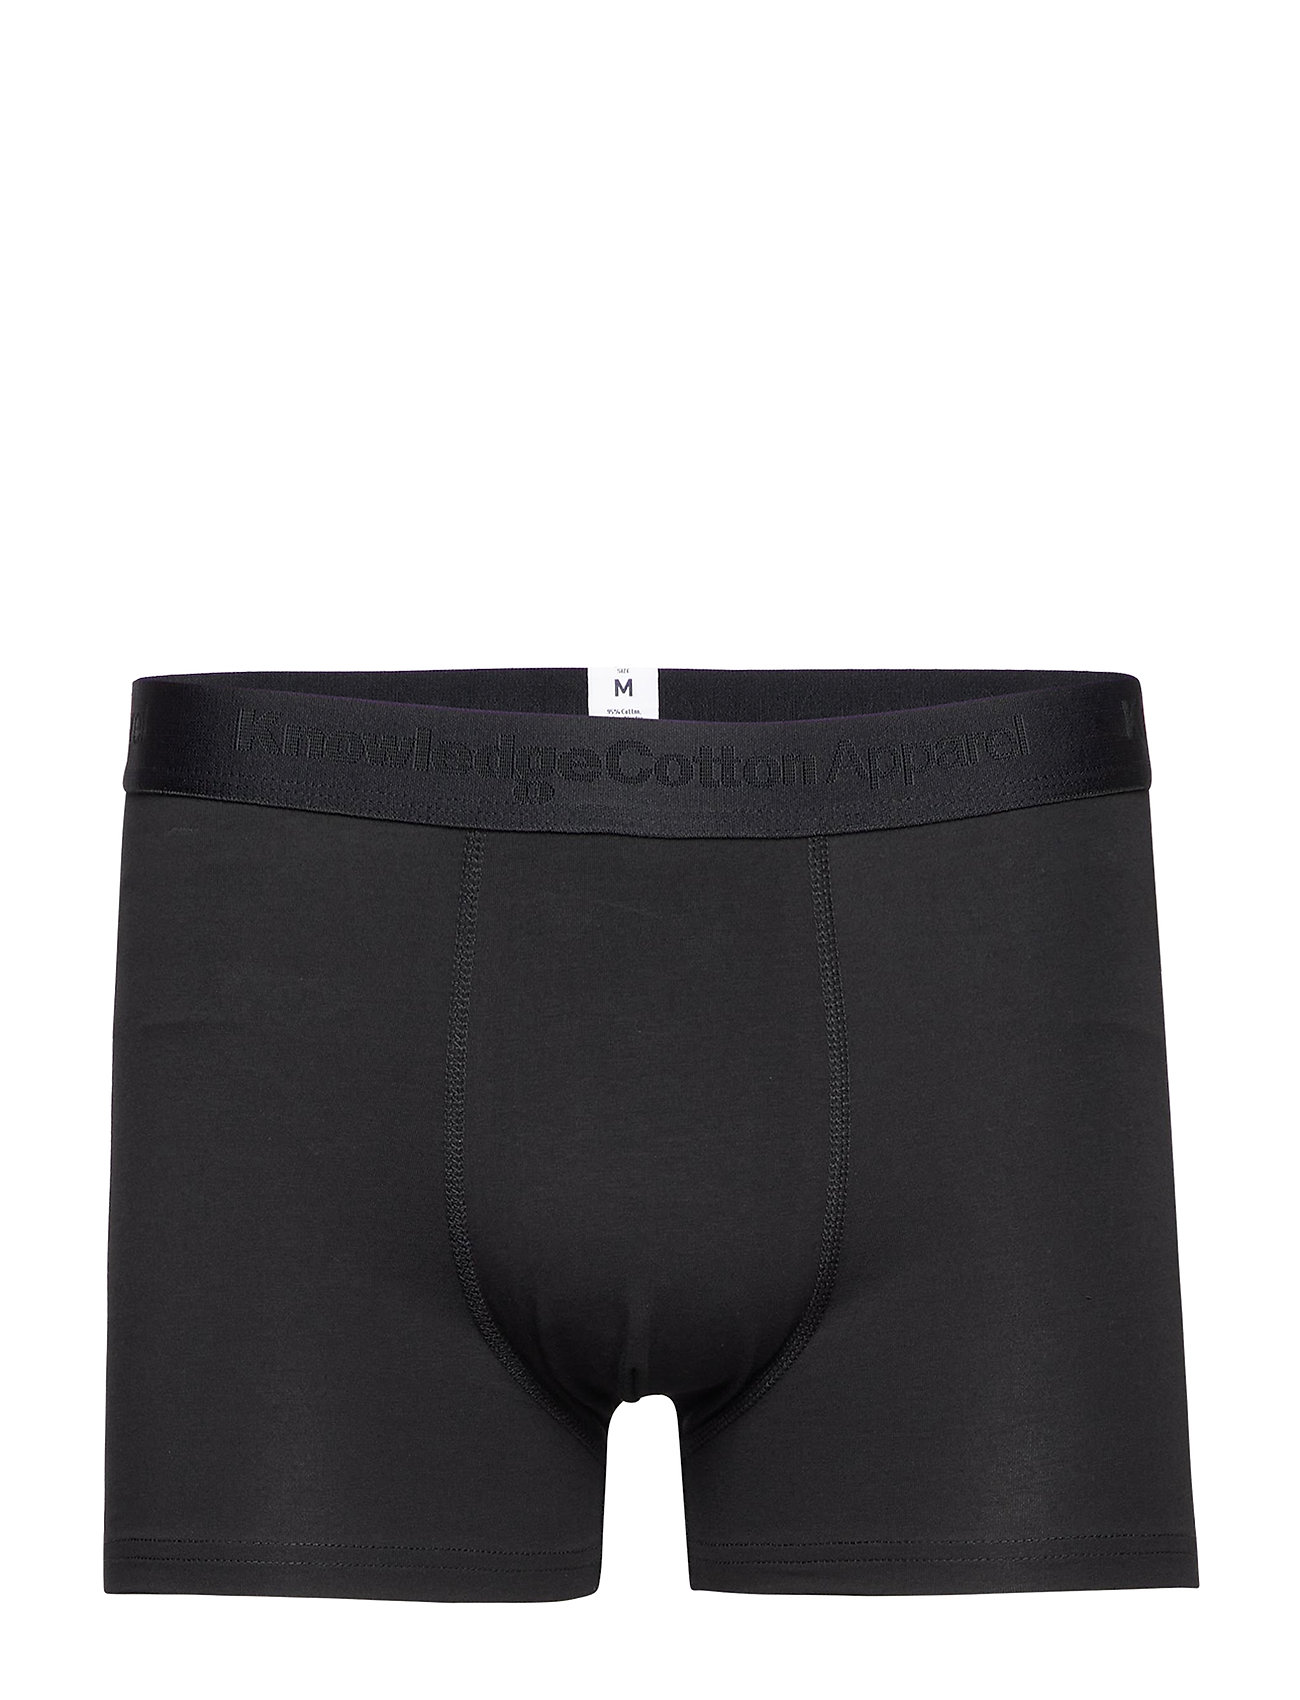 Knowledge Cotton Apparel - 6-pack underwear - GOTS/Vegan - multipack underpants - black jet - 4